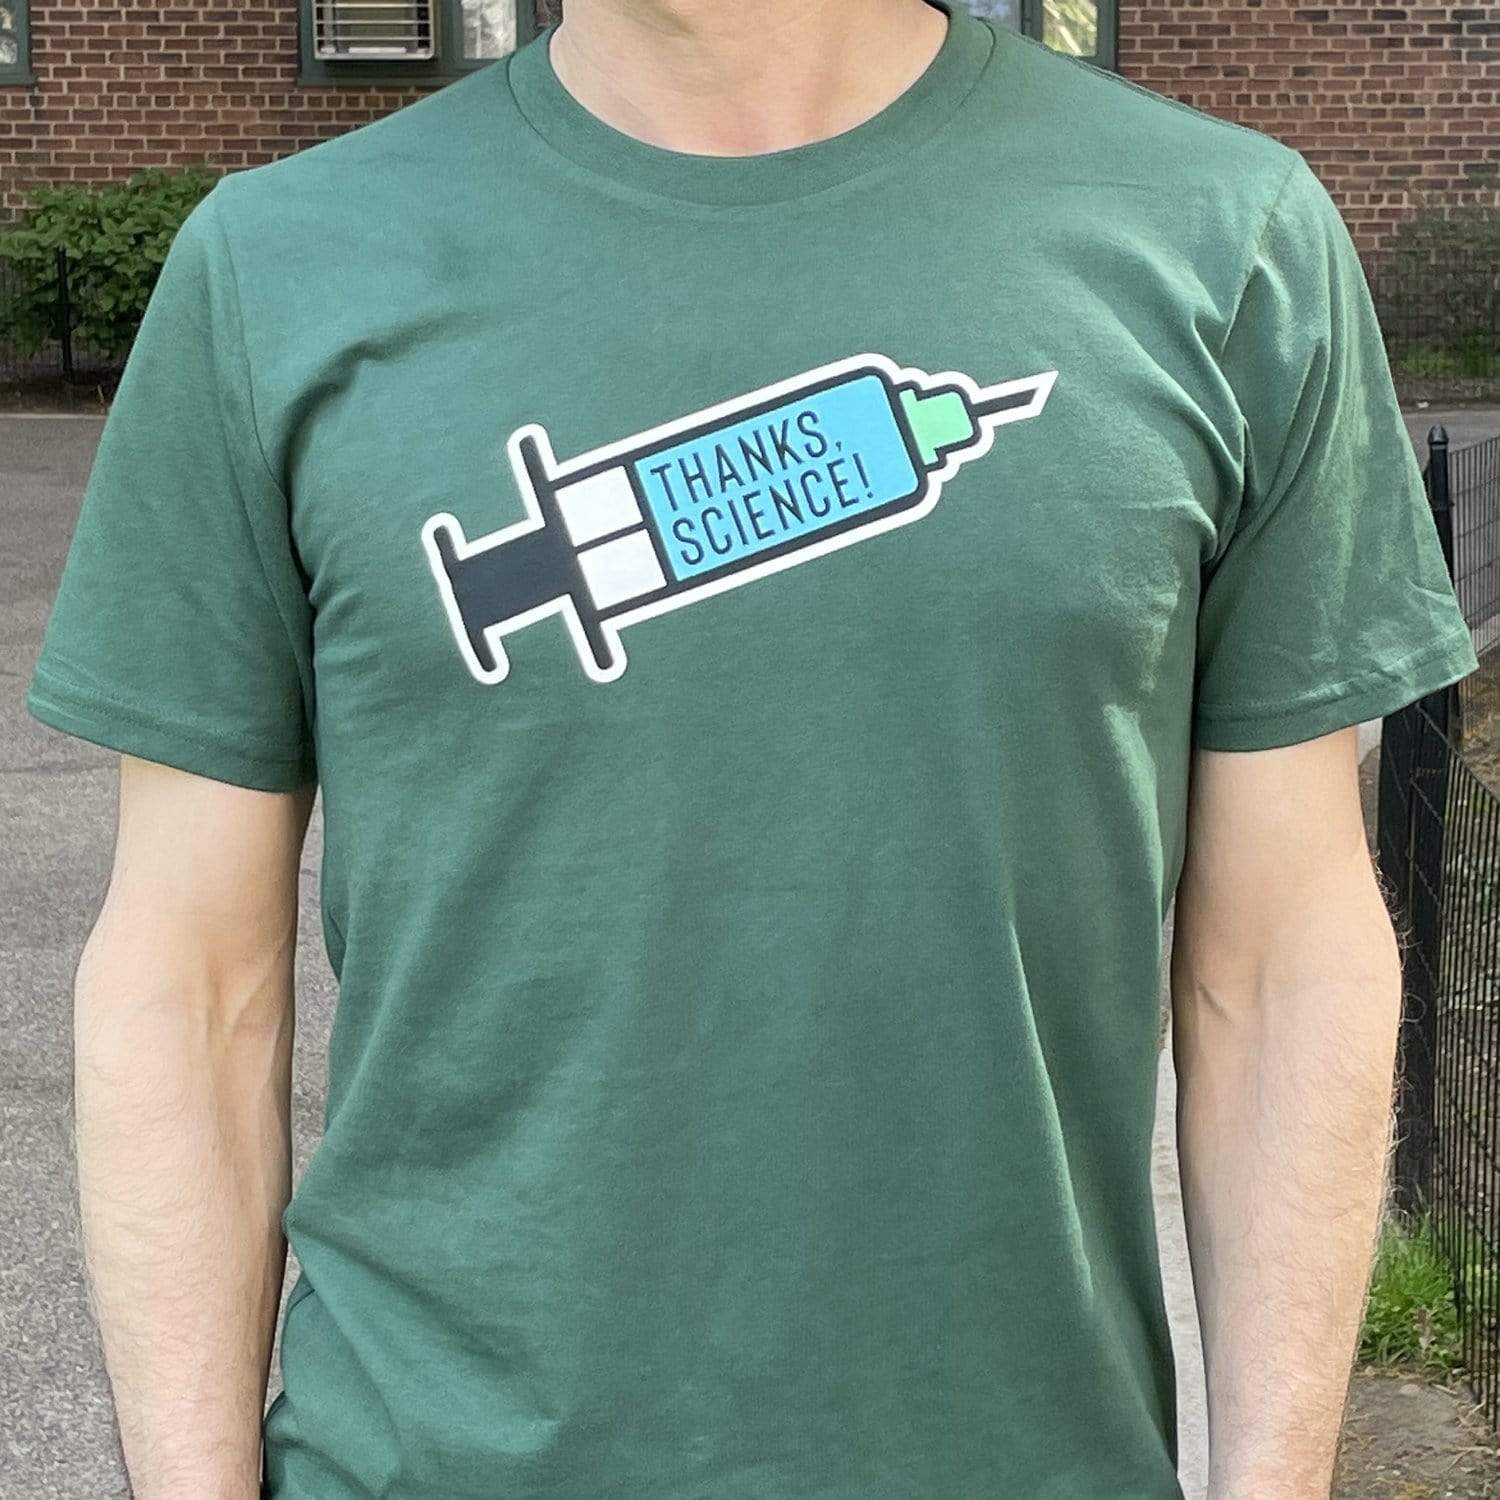 Thanks, Science! T-shirt Pins